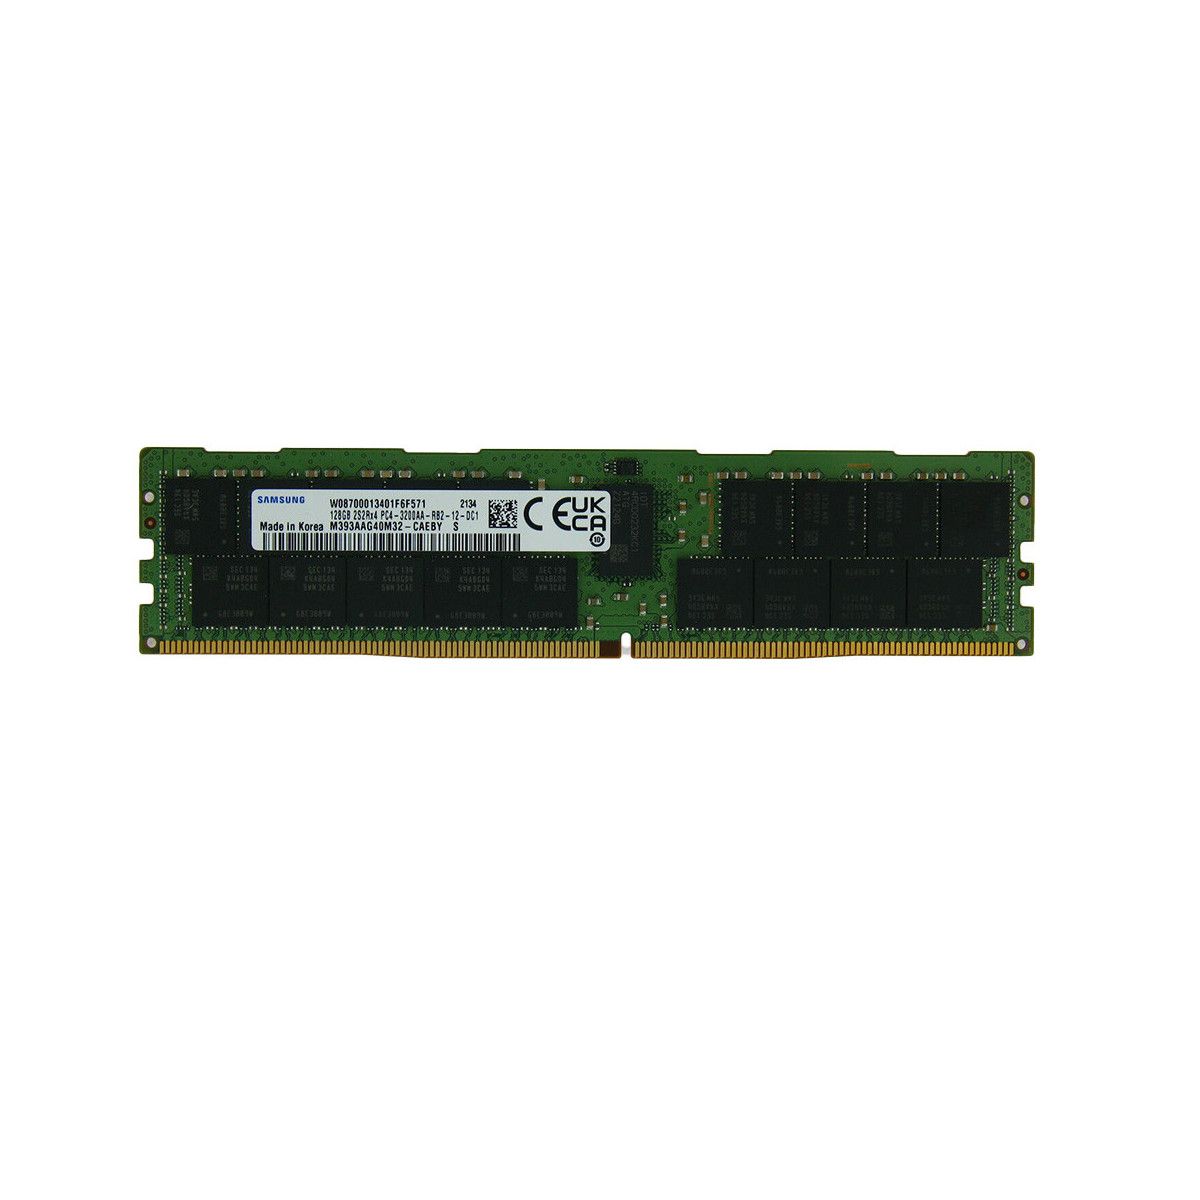 HMABAGR7A2R4N-XS-MS - Memstar 1x 128GB DDR4-3200 RDIMM PC4-25600R - Mem-Star OEM Memoria compatible 1 - Memstar 